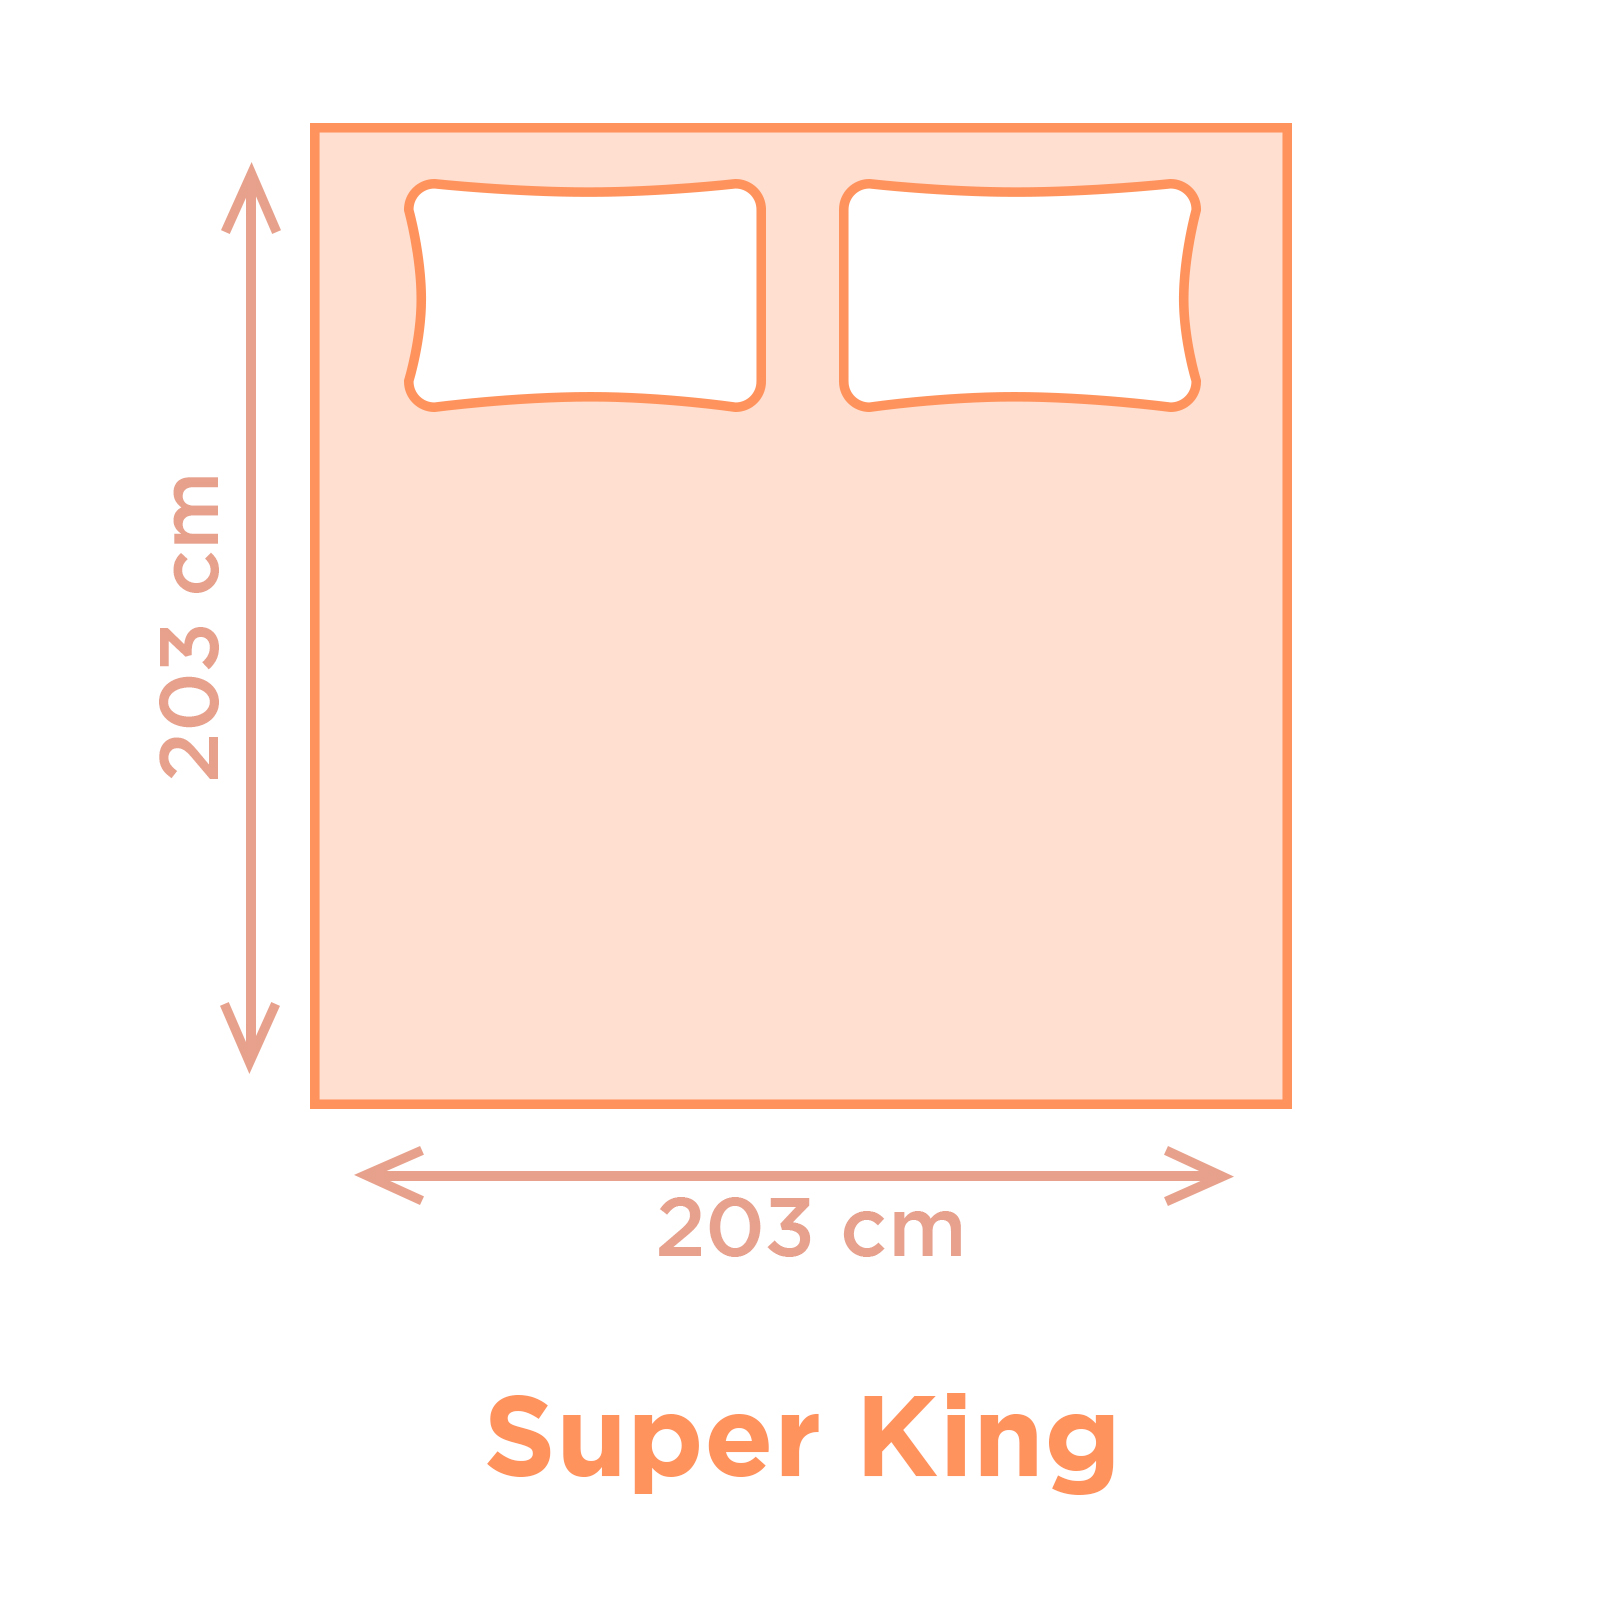 Super King Mattress Size & Dimensions in Australia